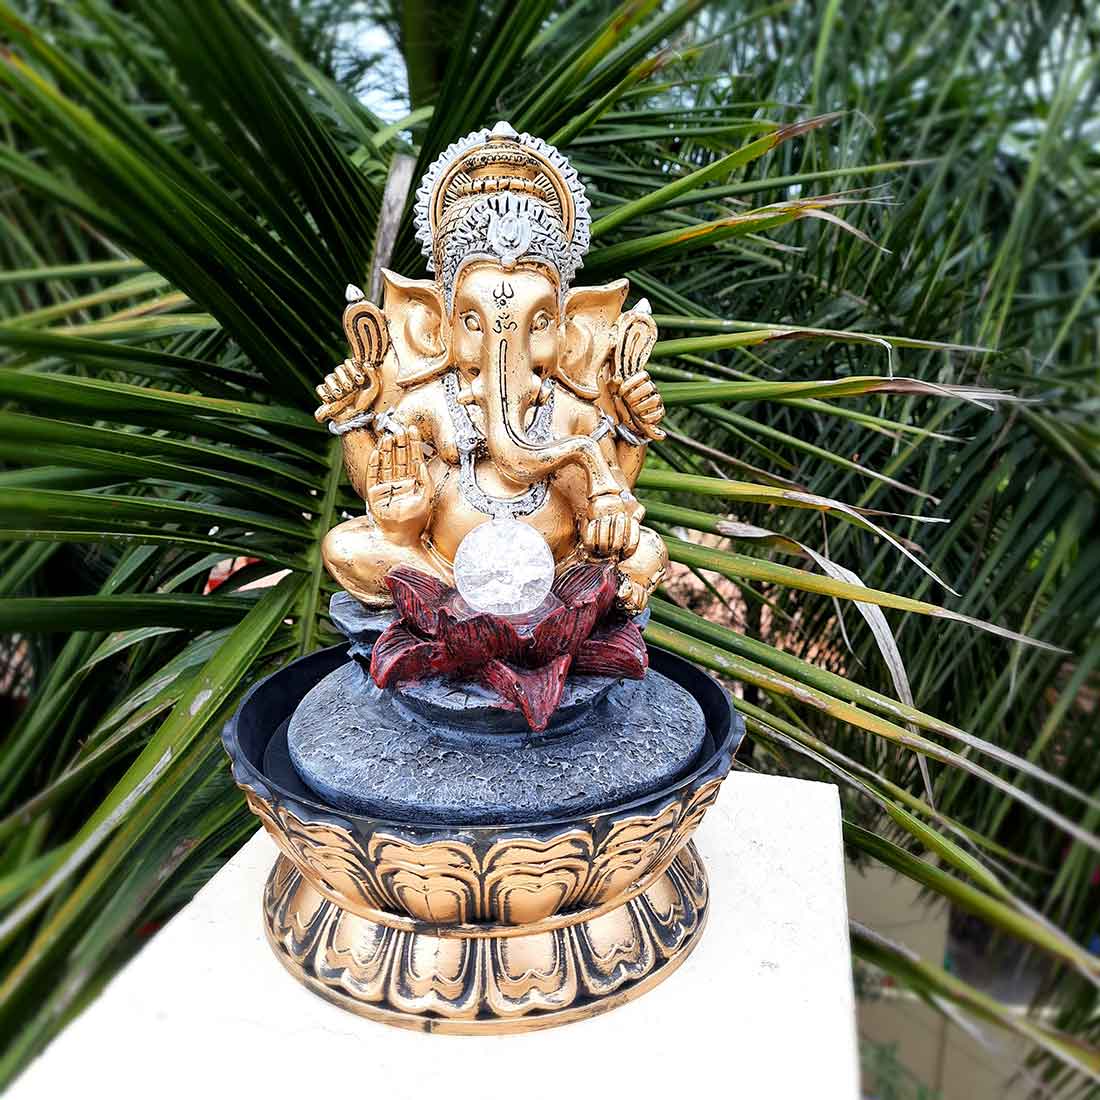 Indoor LED Water Fountain with Ganesha Statue - For Vastu & Home Decor - 16 Inch - ApkaMart